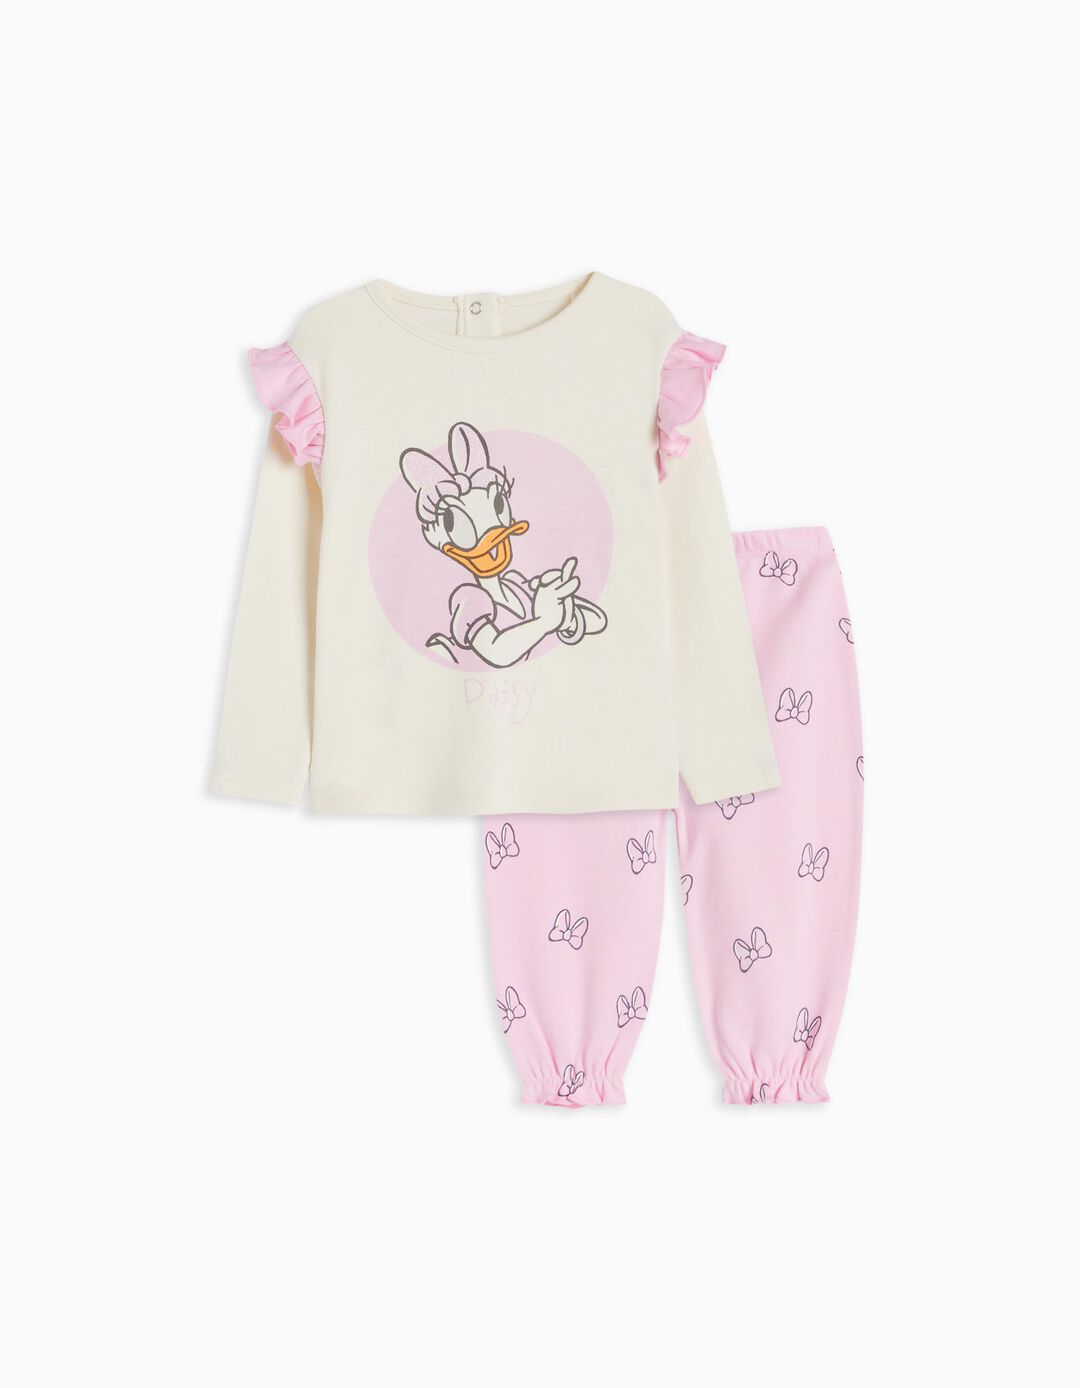 'Disney' pajamas, Baby Girl, Multiple colors